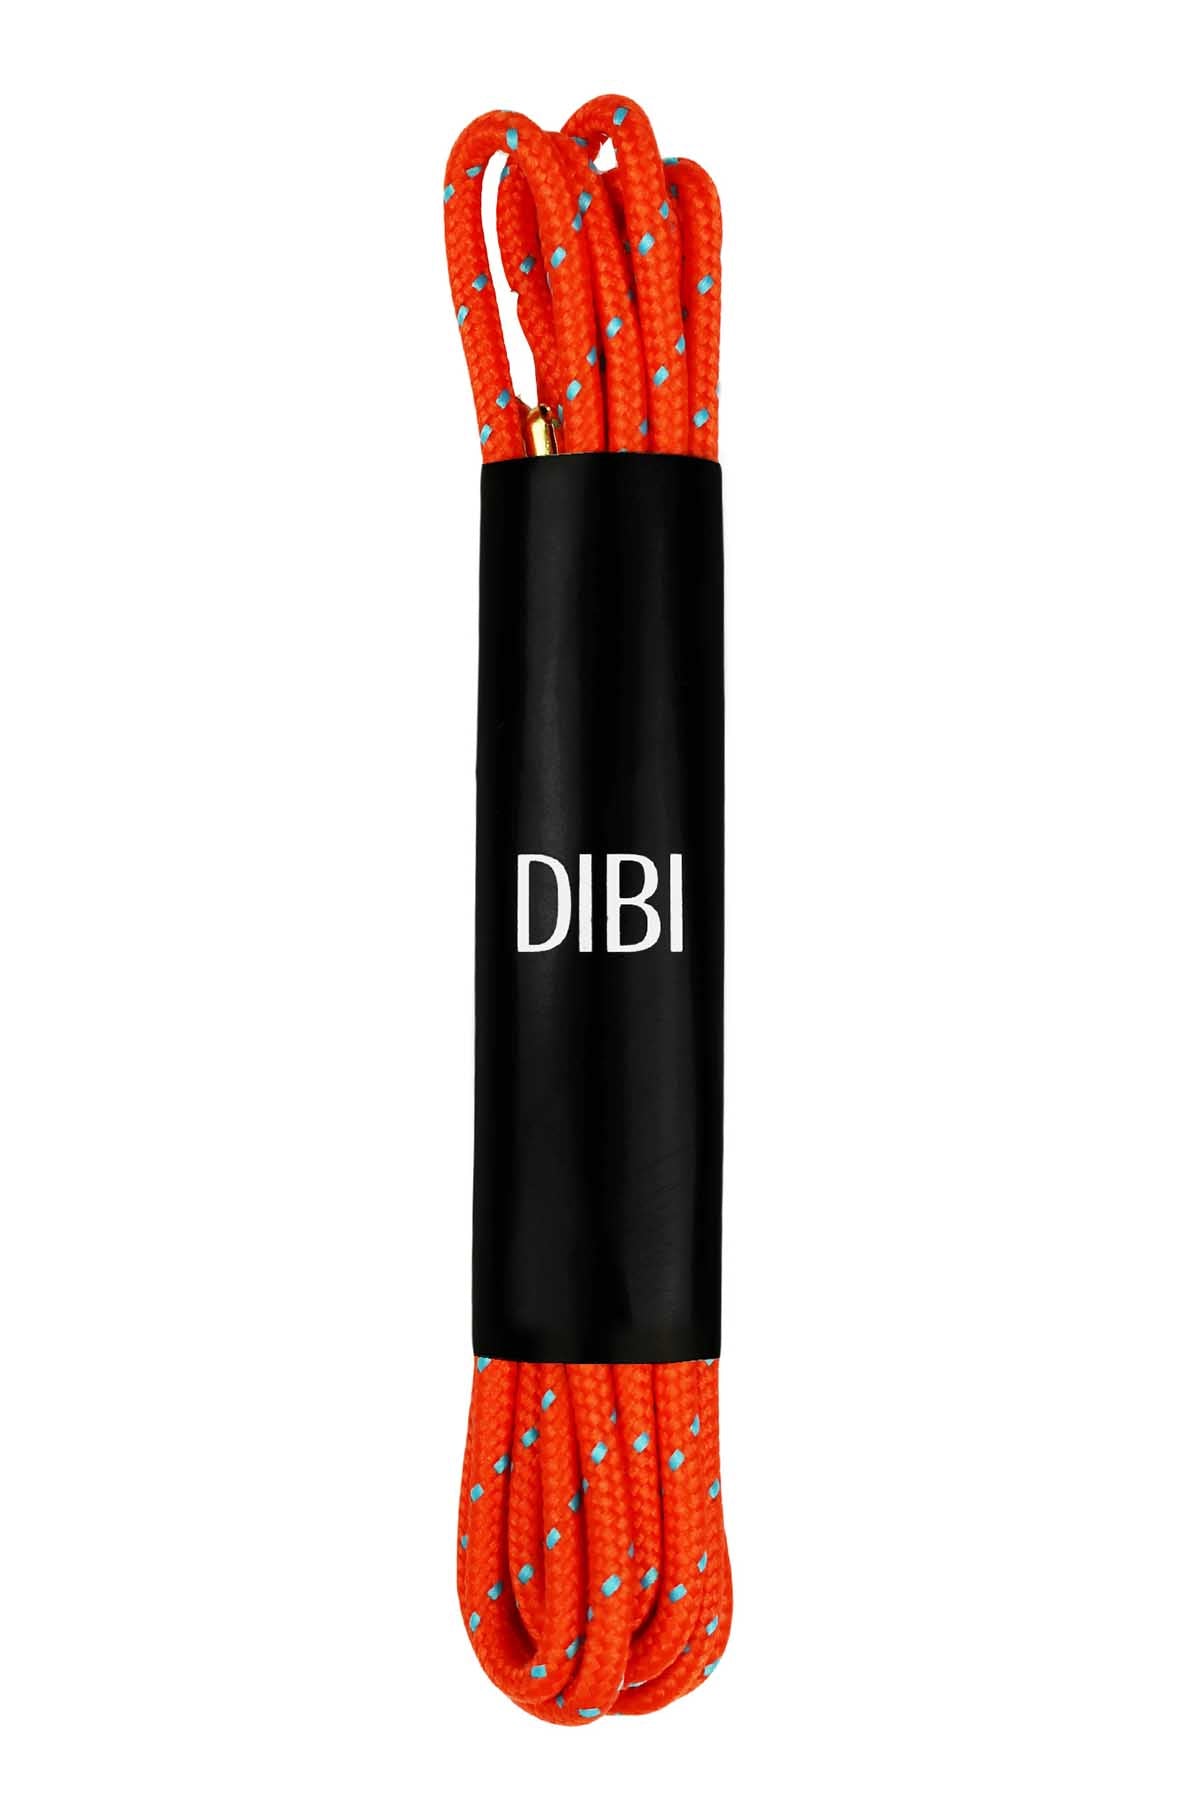 DIBI Bright-Orange Polkadot Dress Shoelaces w/ Gold Aglets